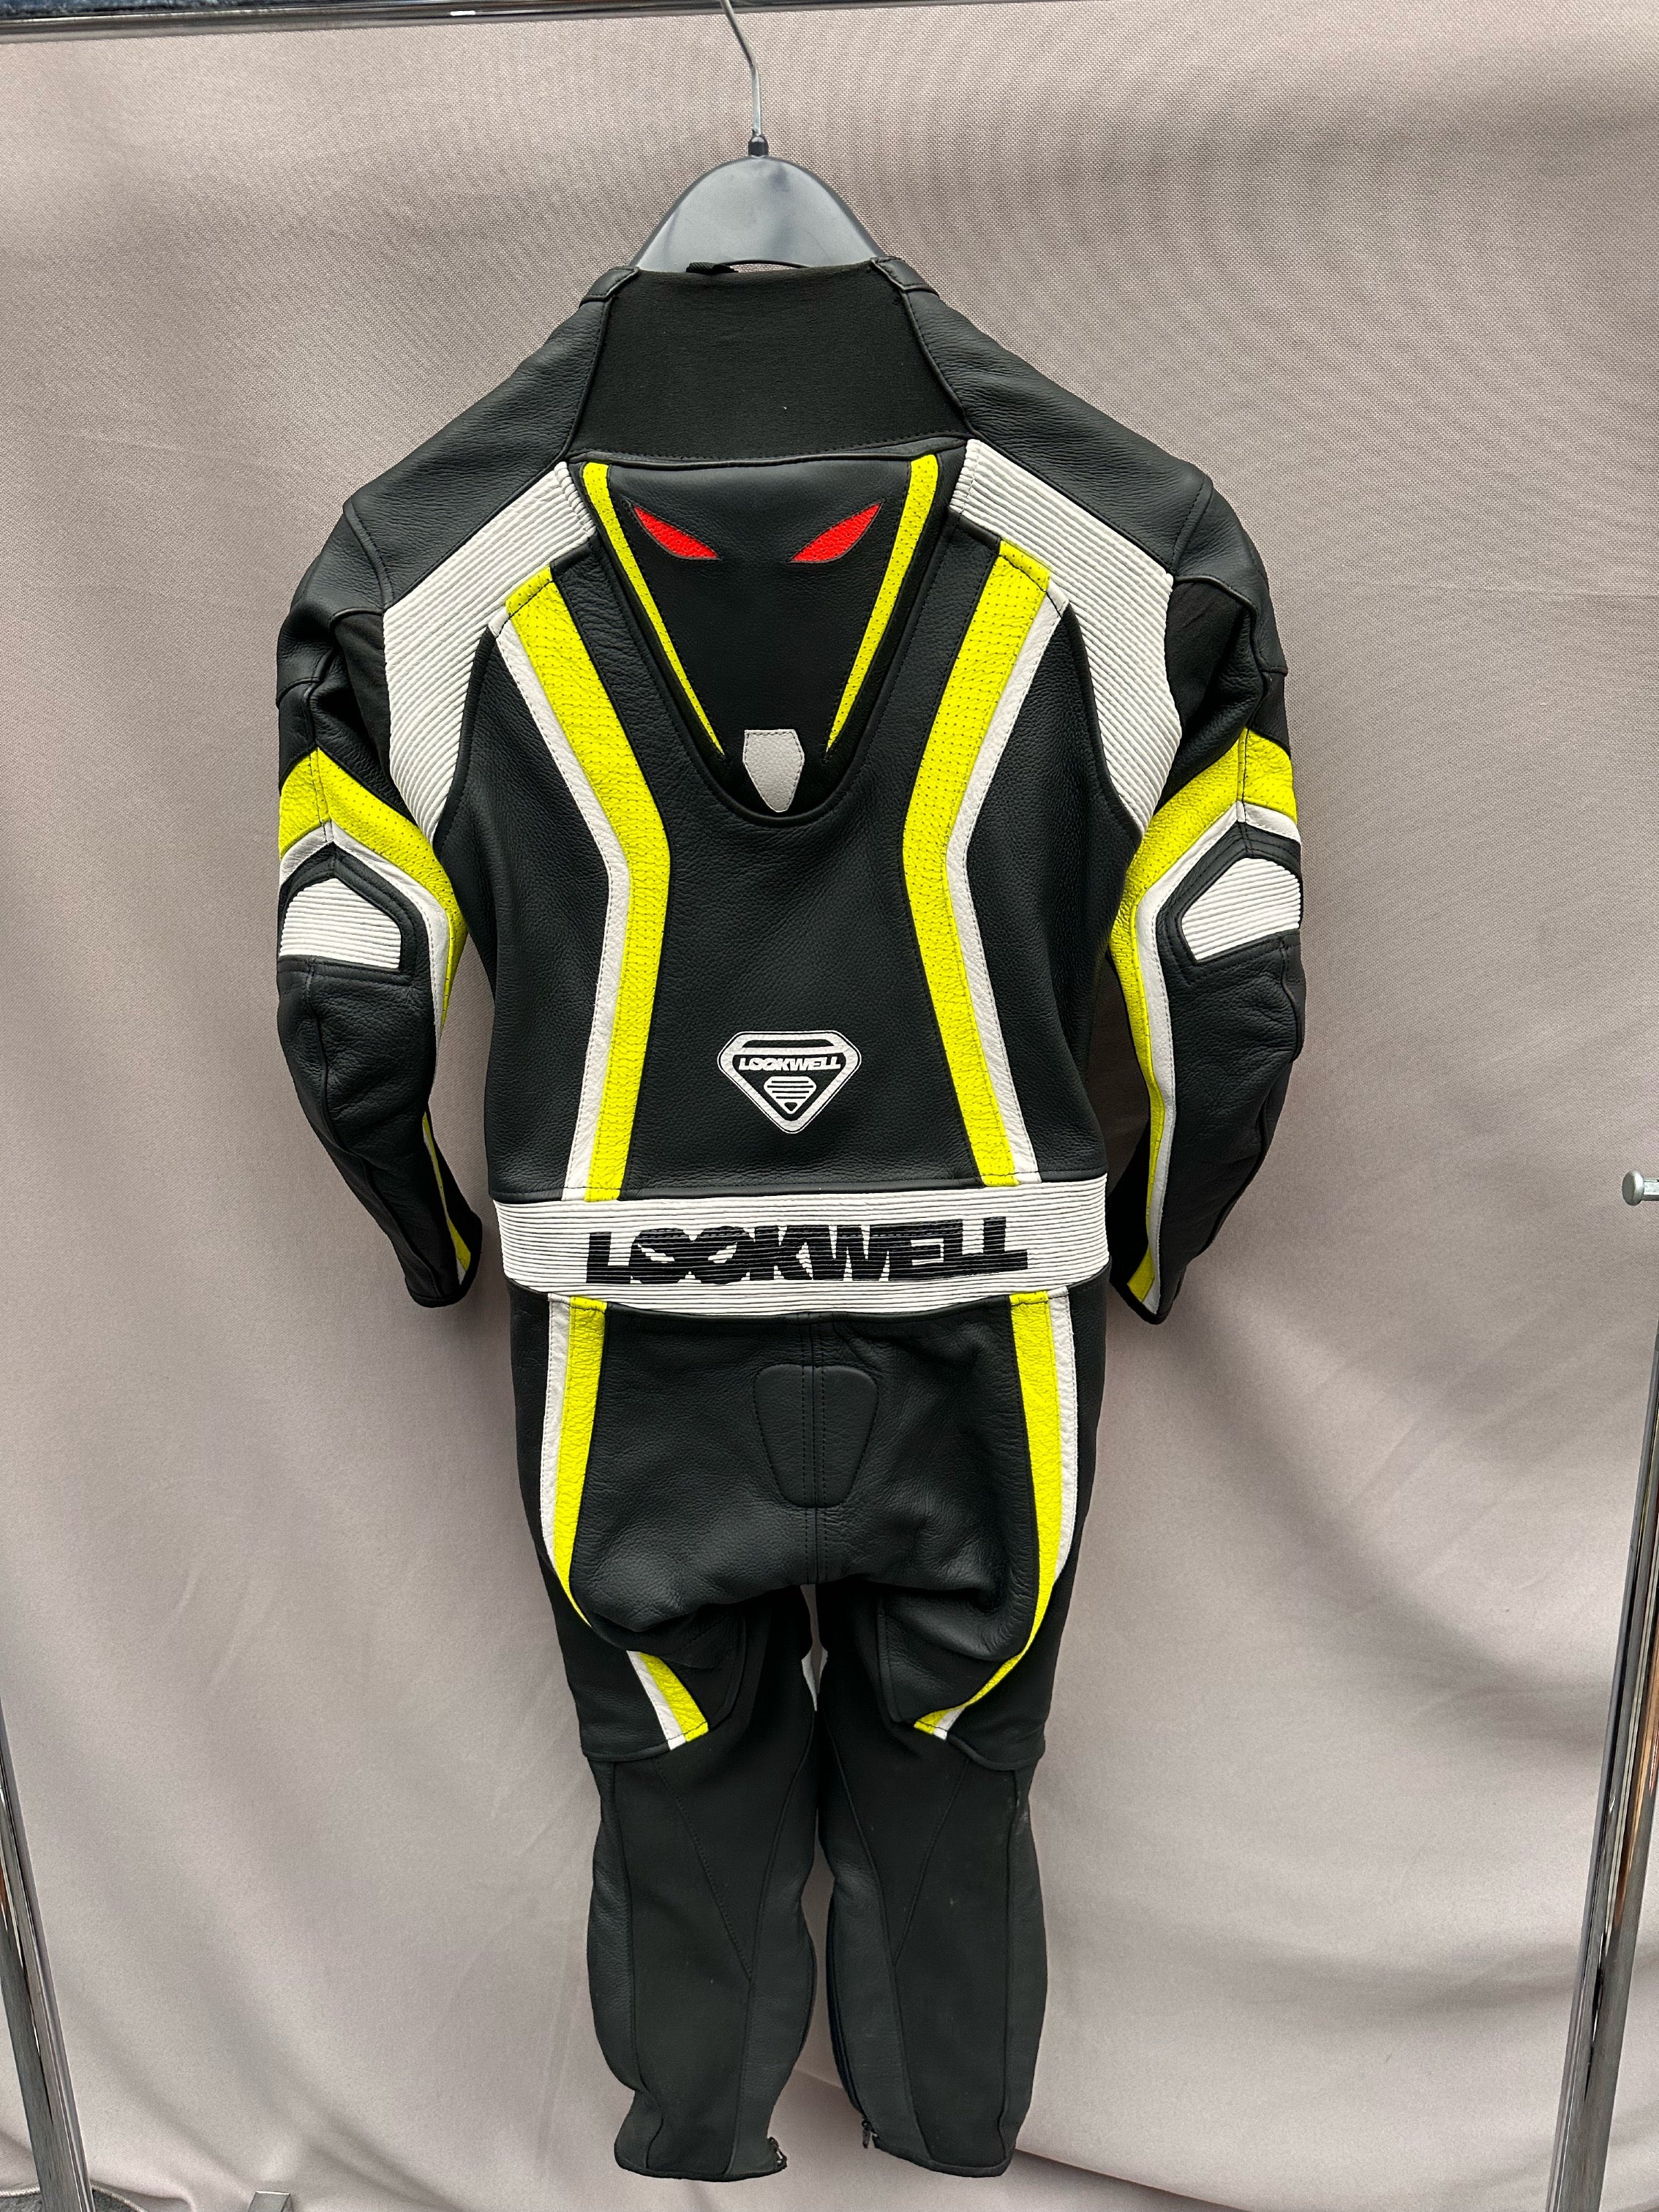 Lookwell Kids Race Suit [8]